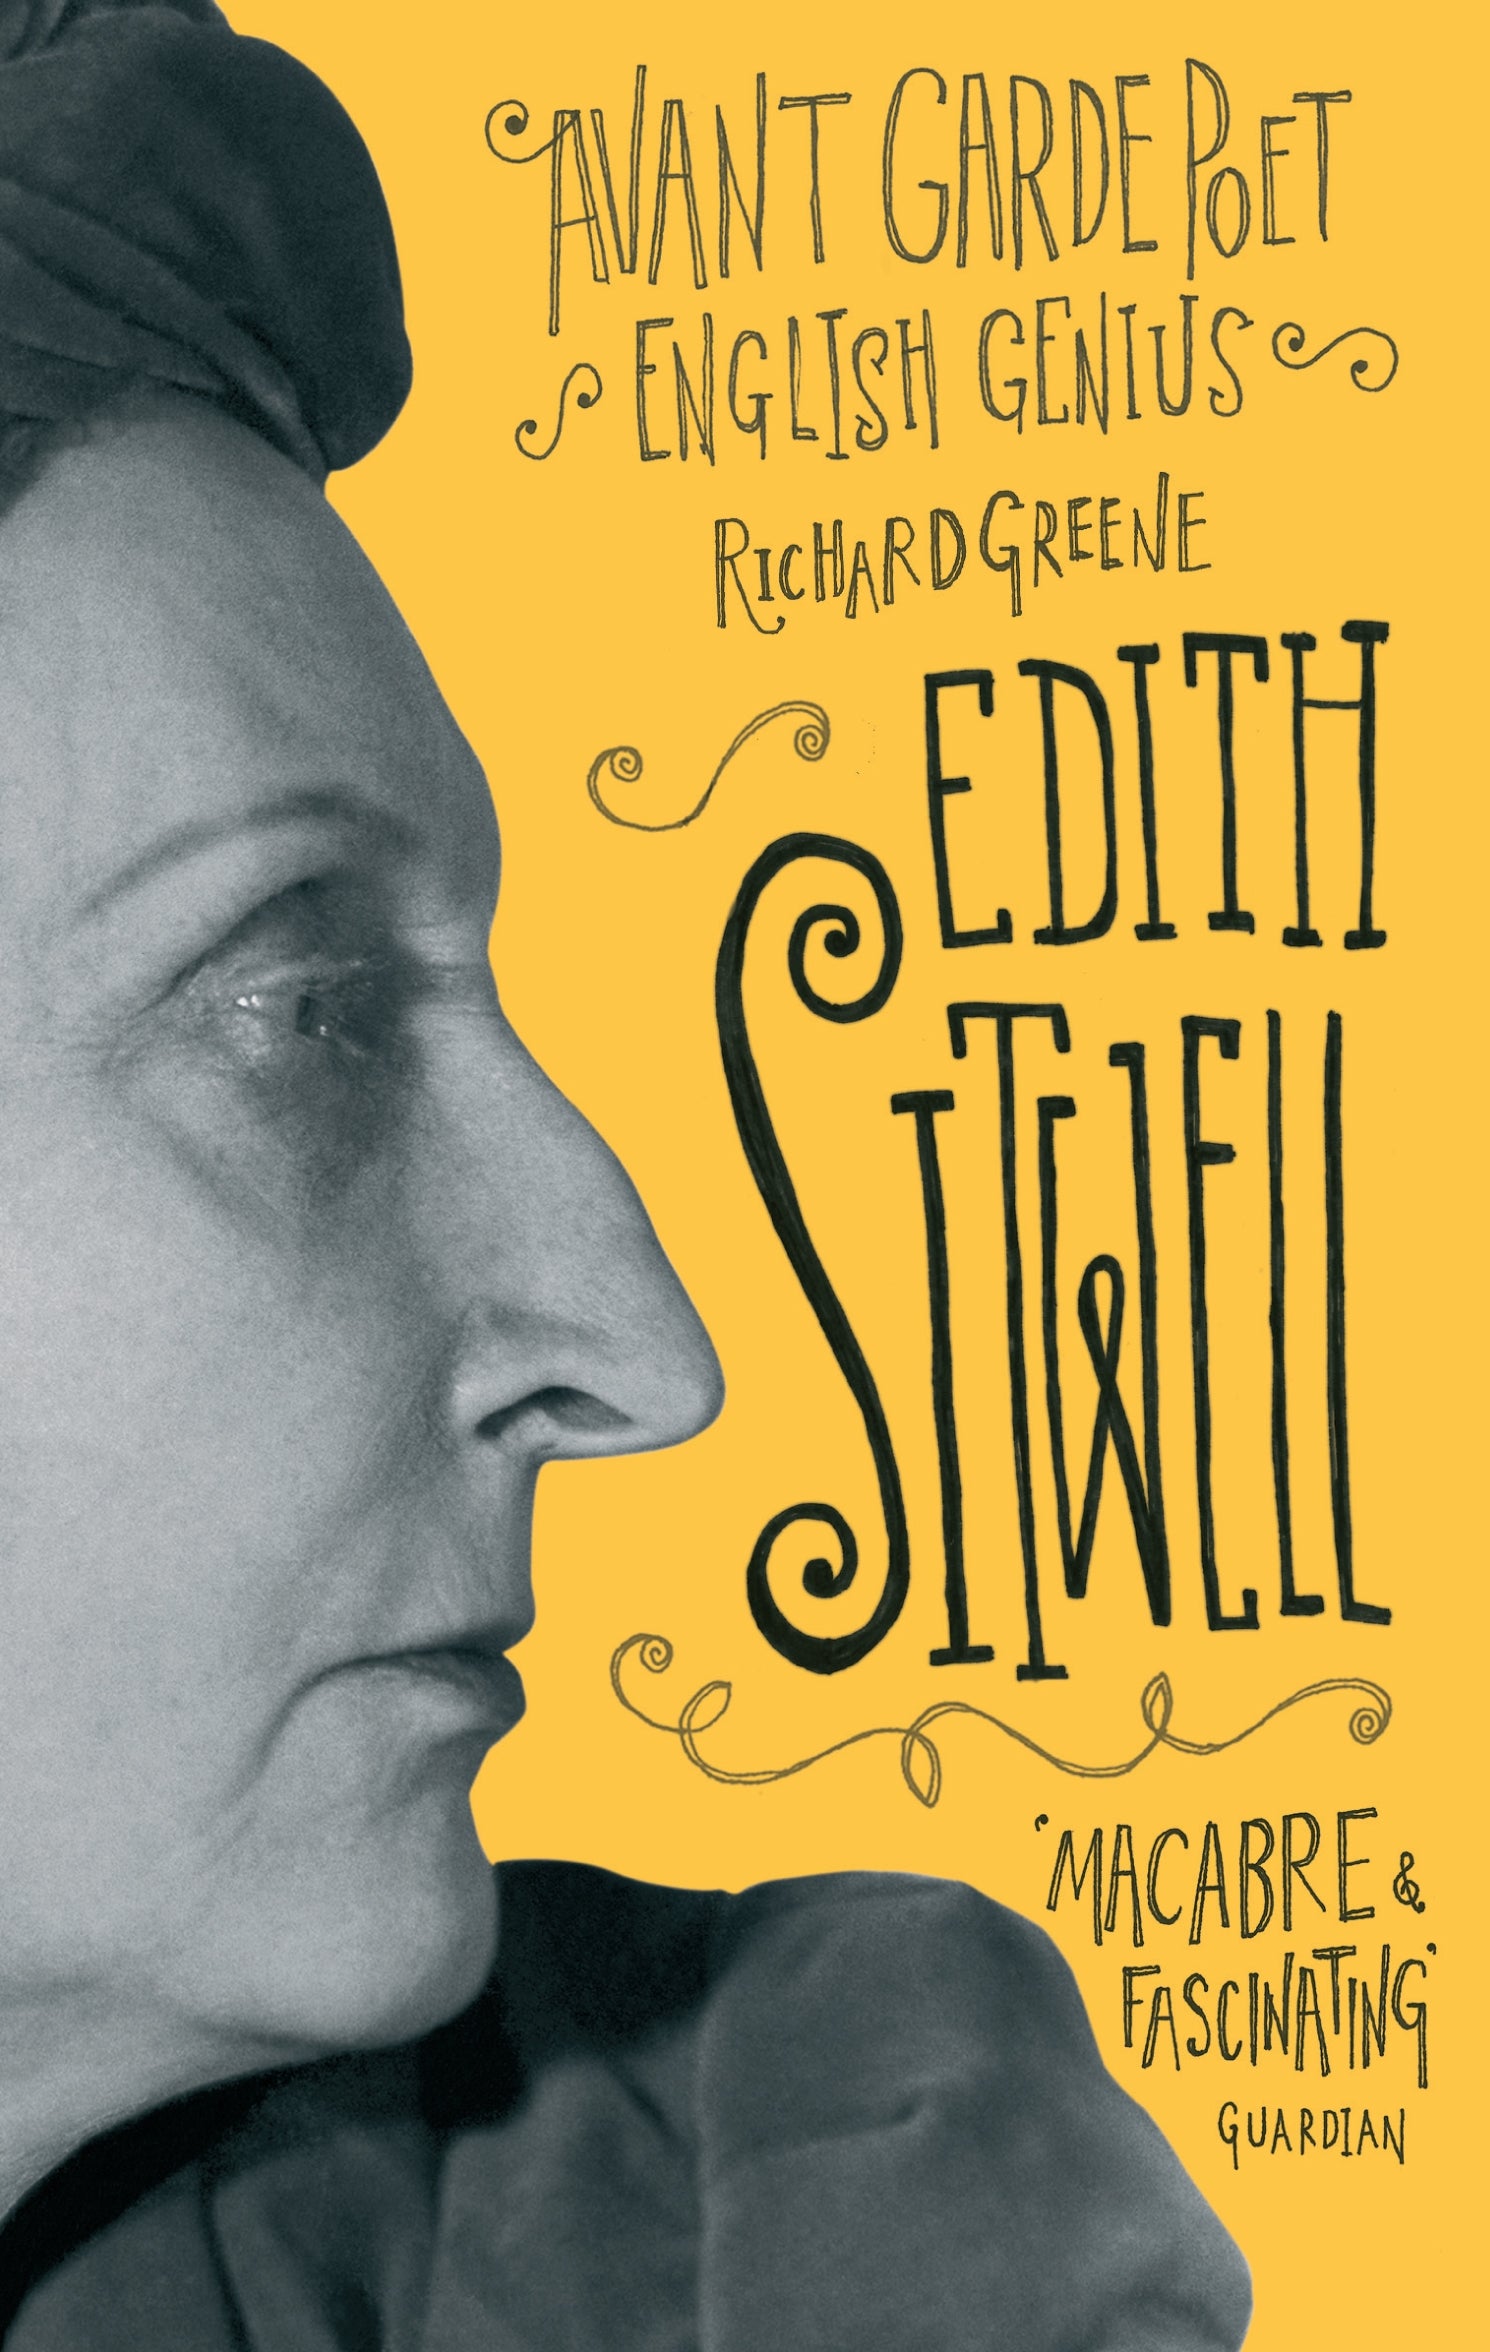 Edith Sitwell by Richard Greene